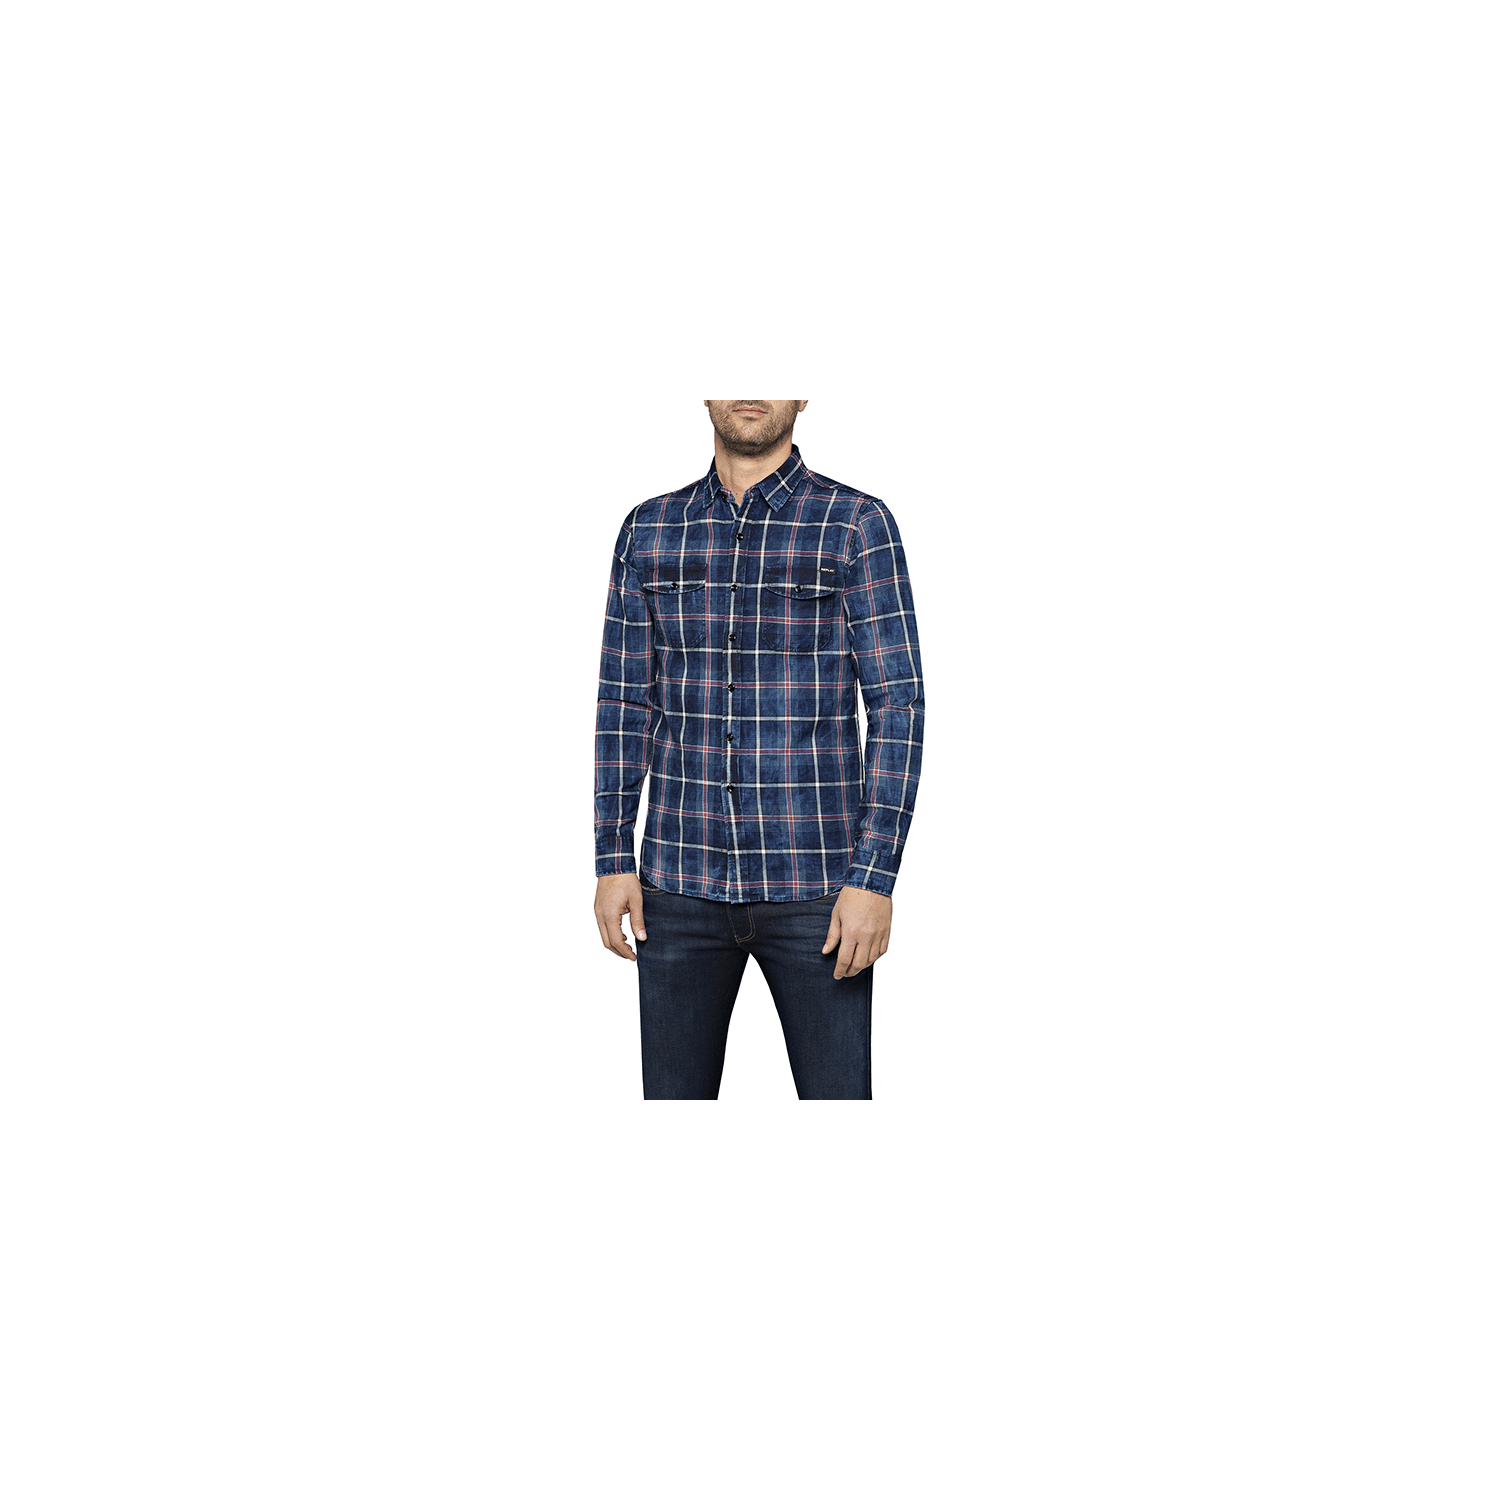 Replay m4987 shirt indigo flannel check navy/red